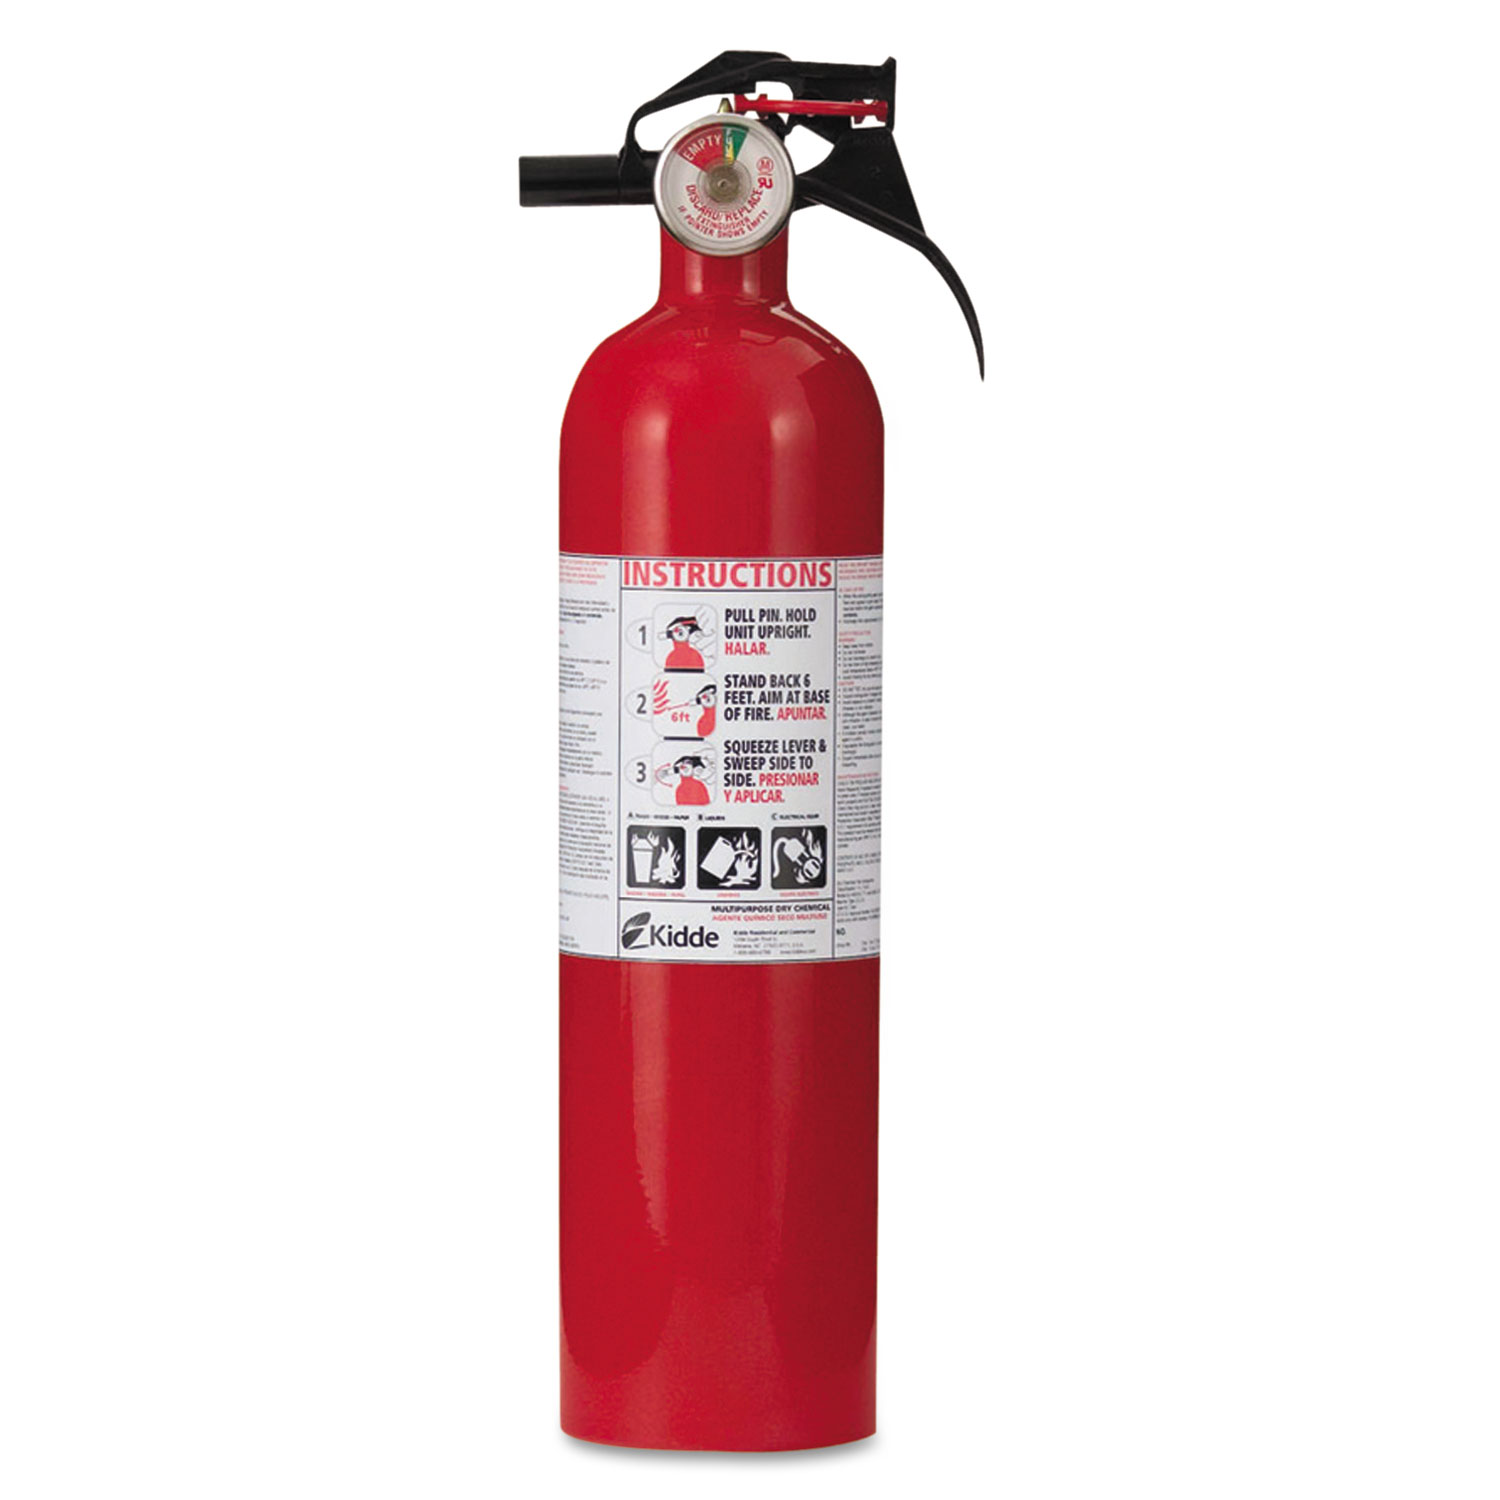 Full Home Fire Extinguisher, 2.5lb, 1-A, 10-B:C